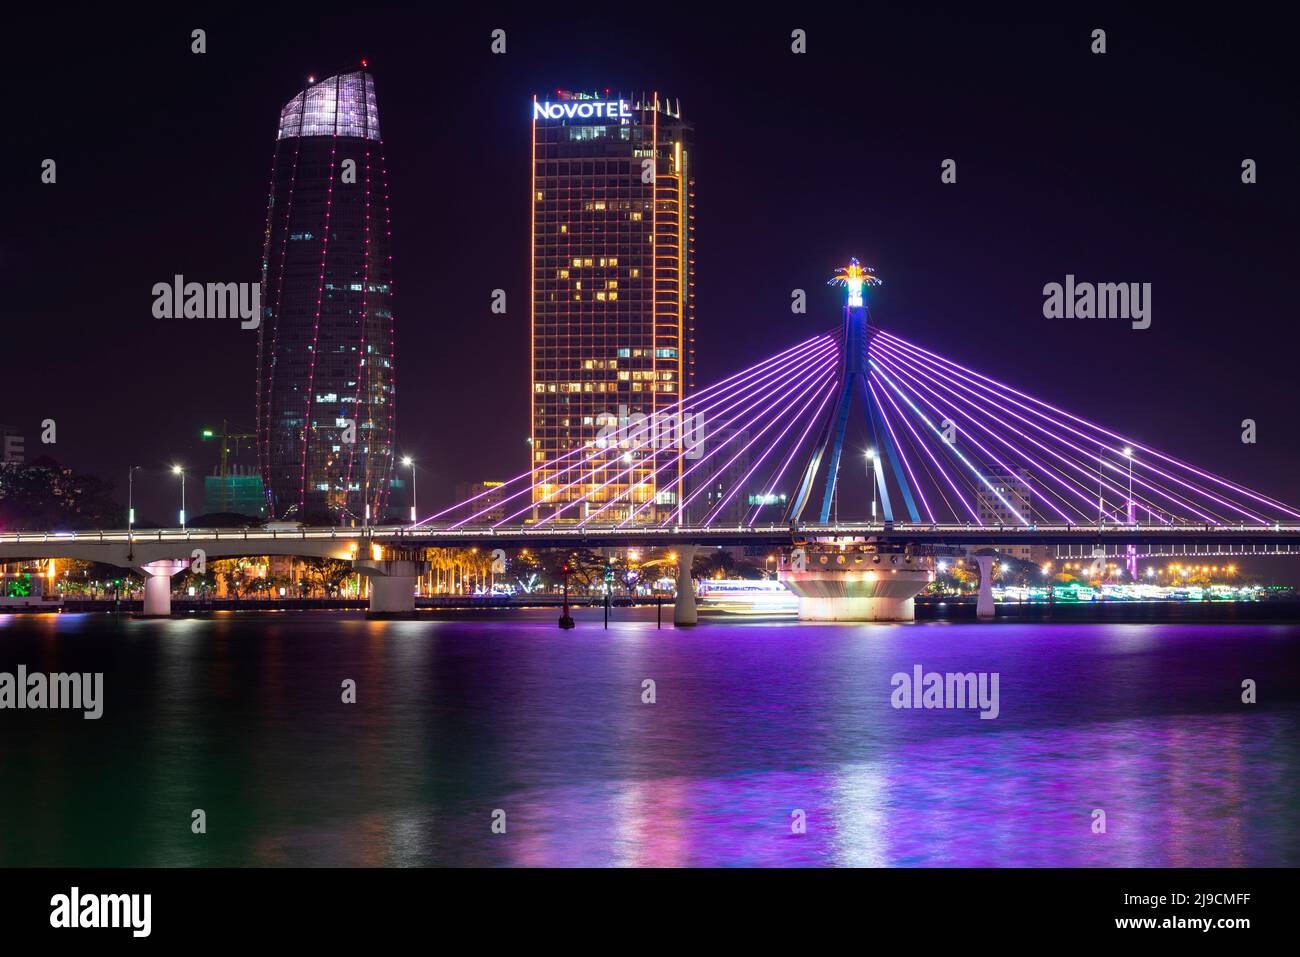 DA NANG, VIETNAM - JANUARY 06, 2016: Cable-stayed bridge in the night urban landscape. Da Nang, Vietnam Stock Photo